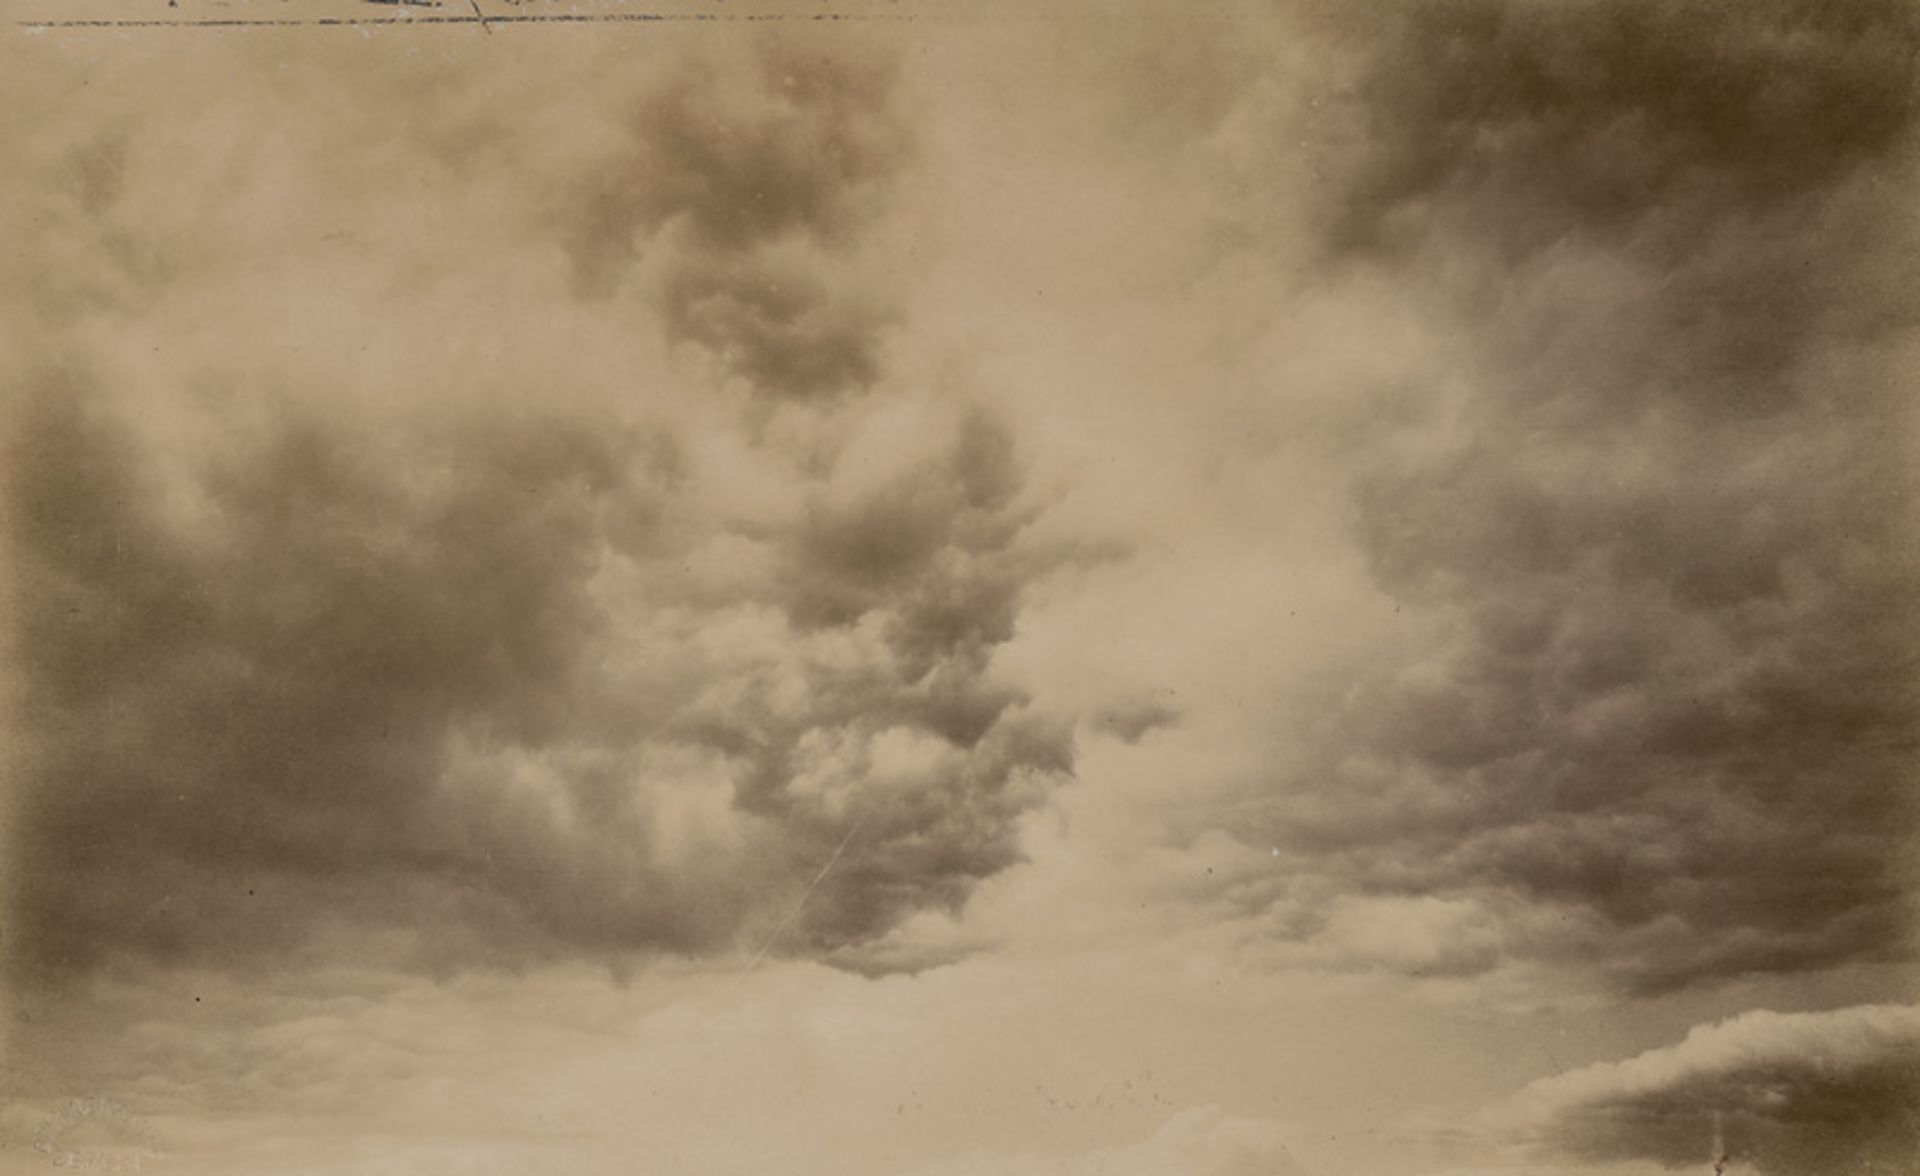 Neuhauss, Dr. Richard Gustav: Selected images from the "Wolken-Atlas" (Cloud Atlas) - Image 4 of 5